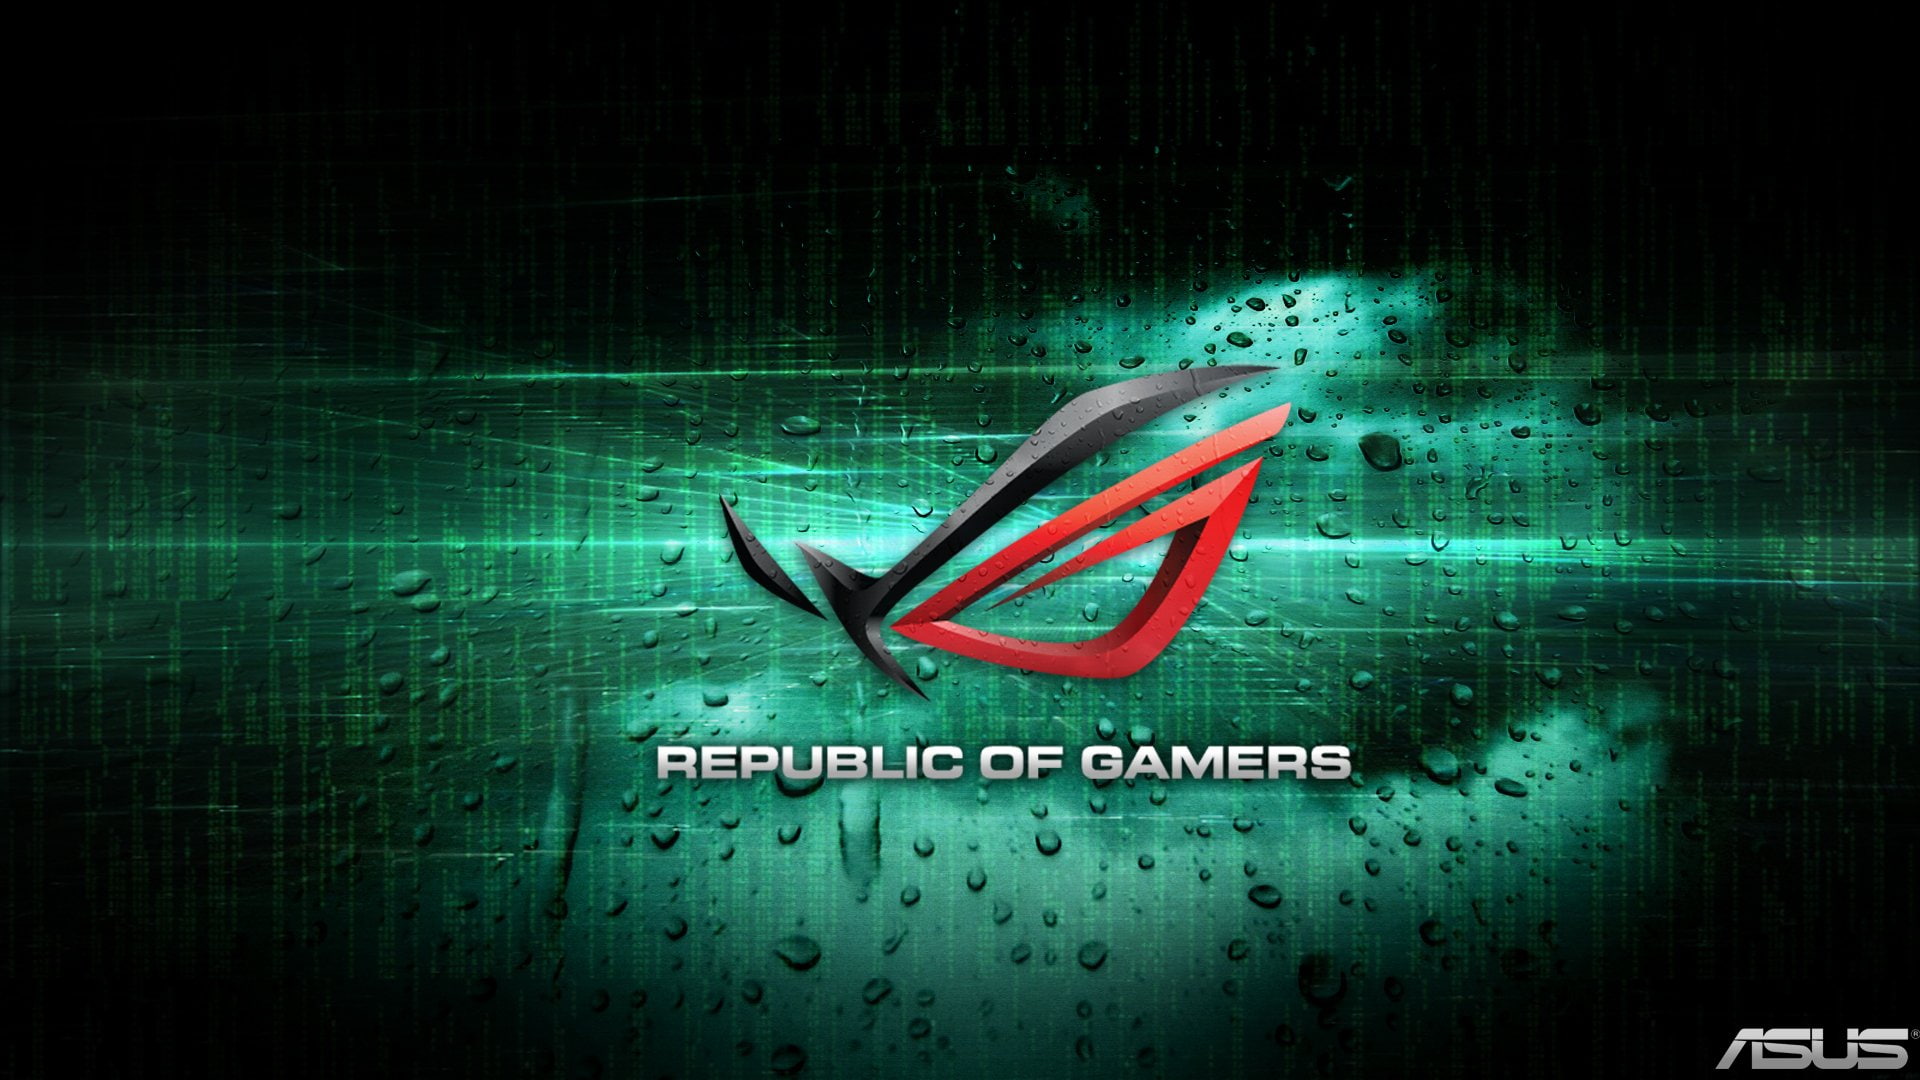 asus, computer, game, gamers, republic